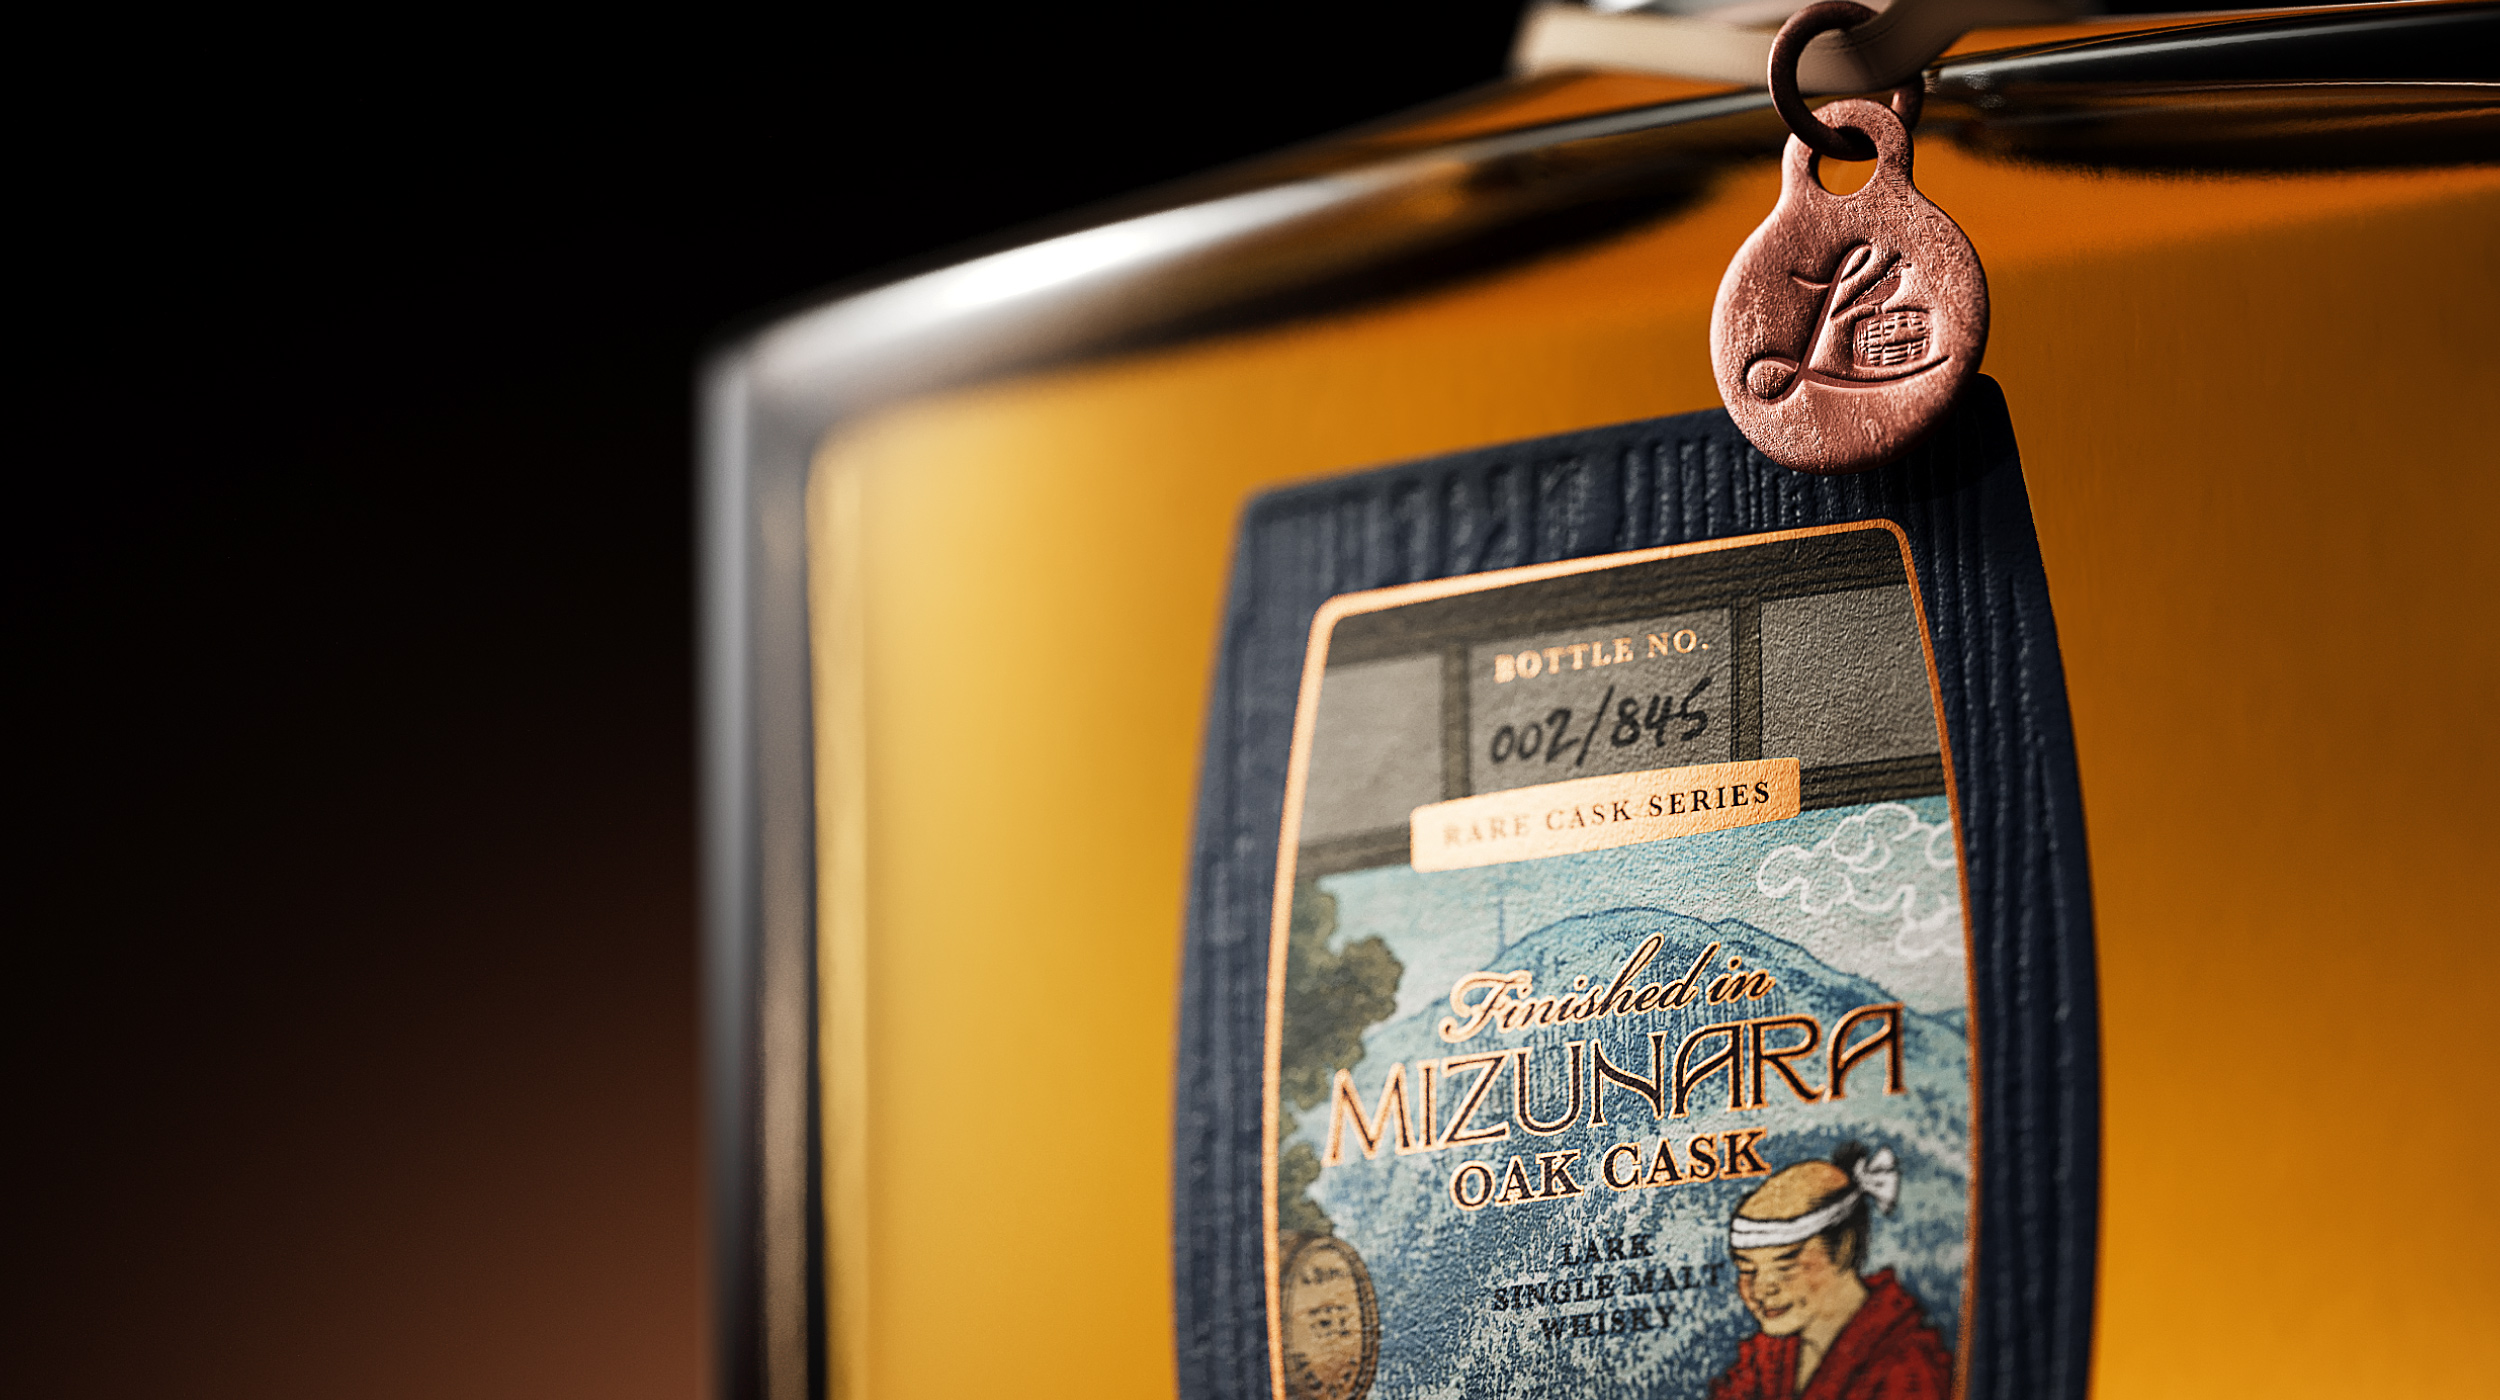 Lark Distillery Rare Cask Series Whiskies Designed by Boldinc